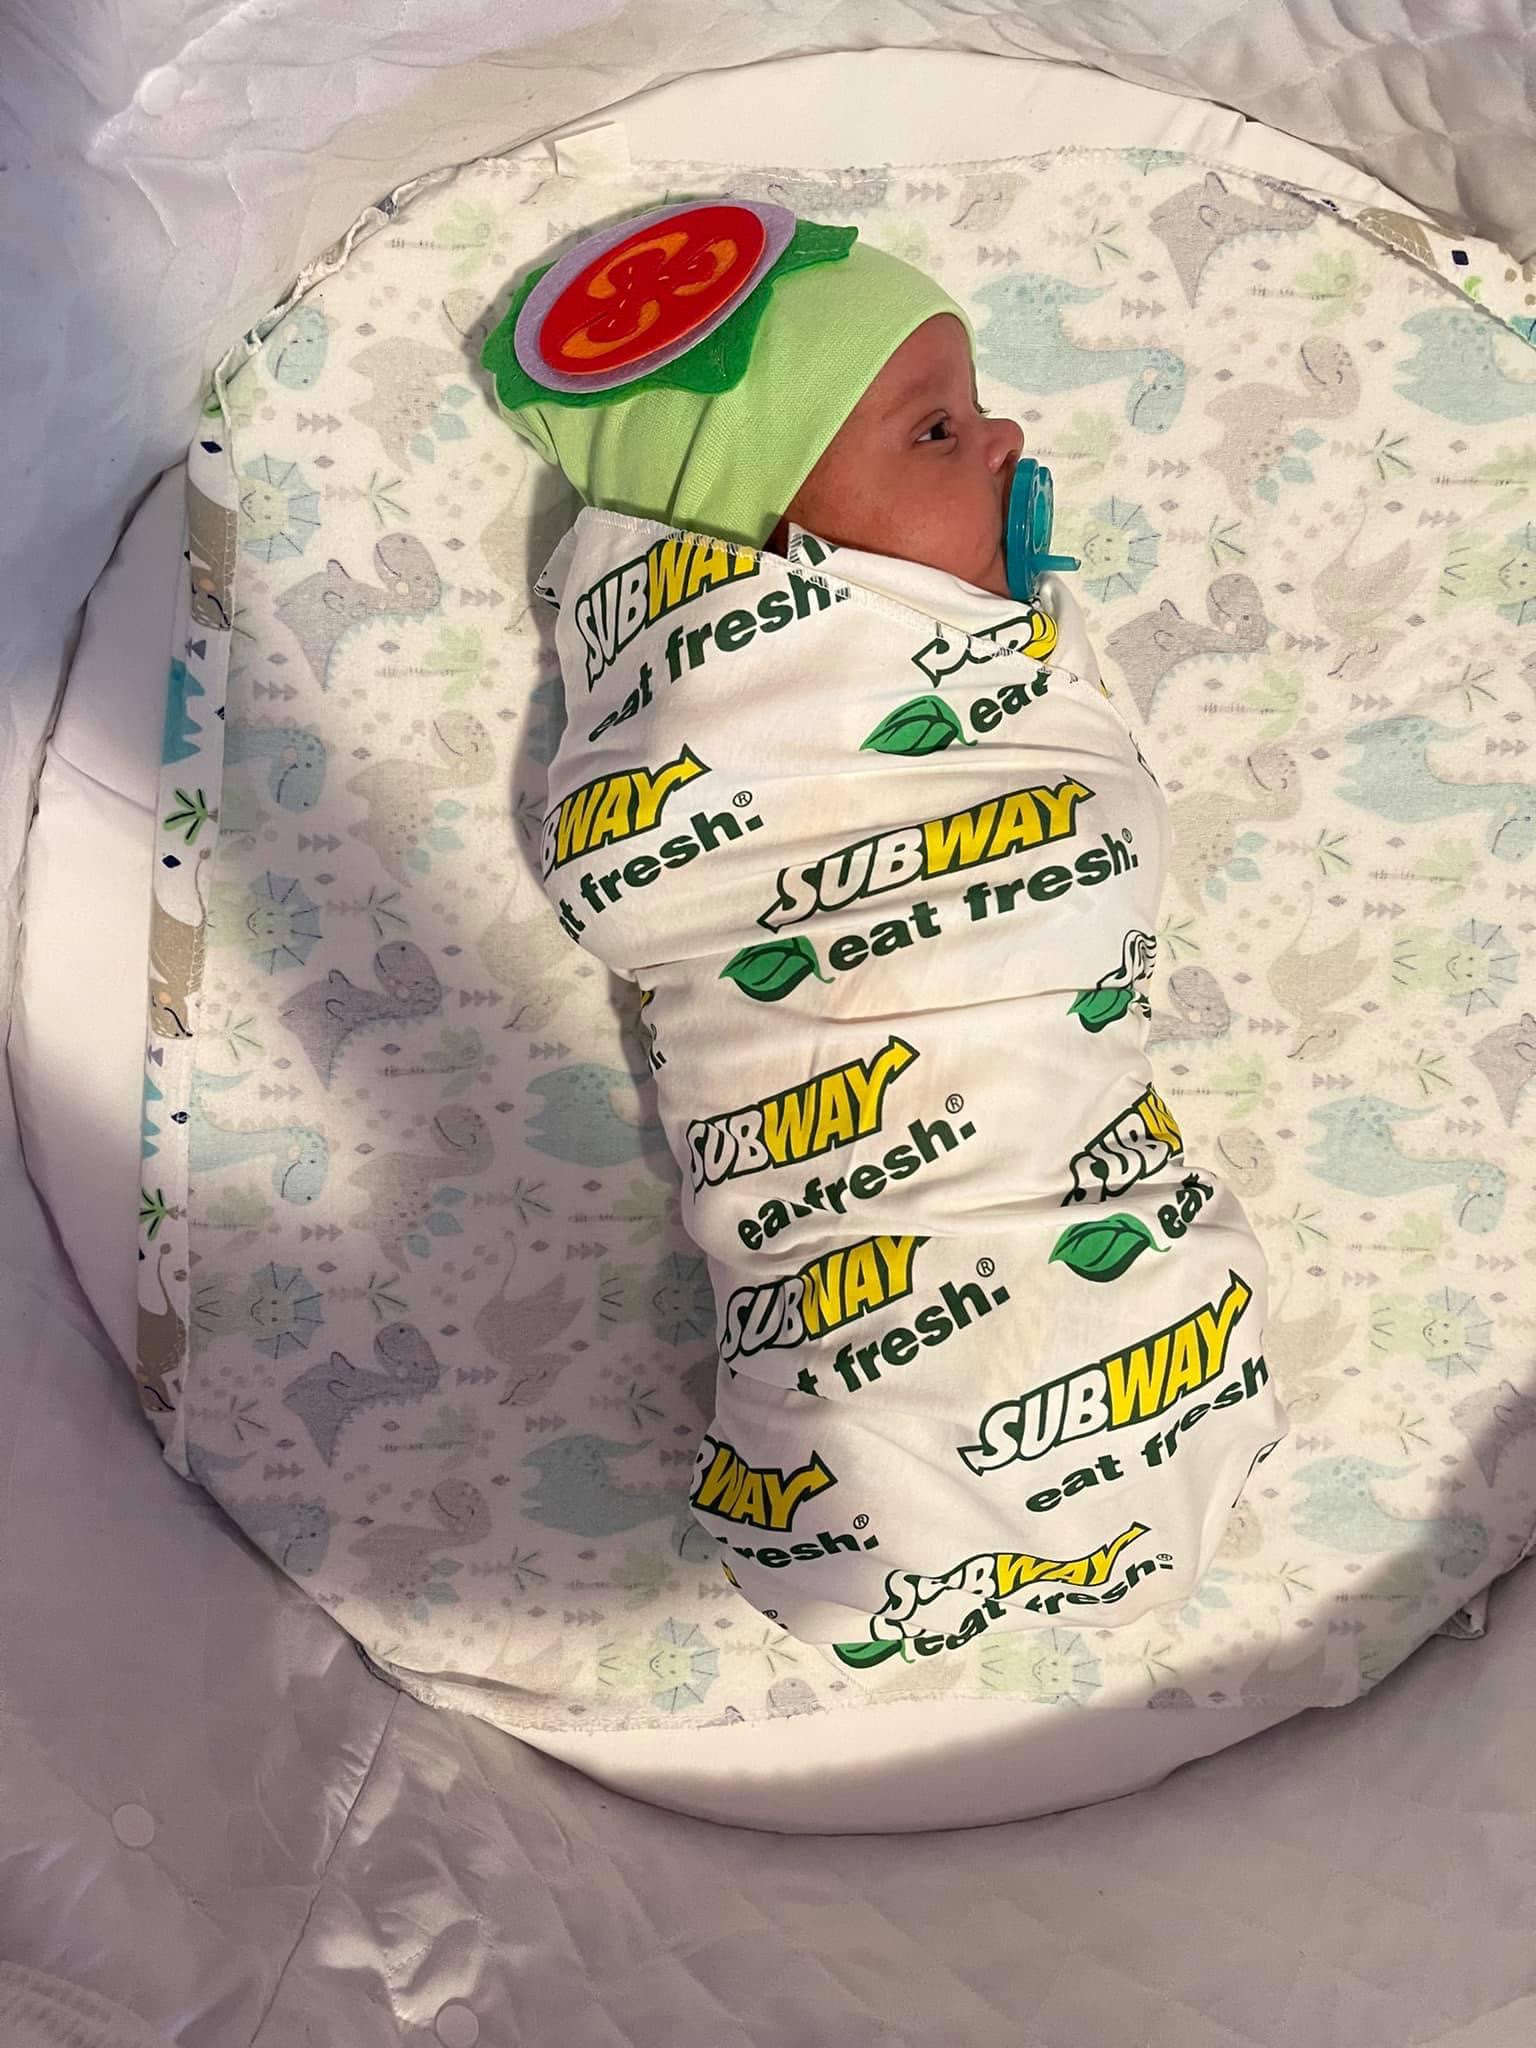 Baby dressed as Subway sandwich Halloween costume